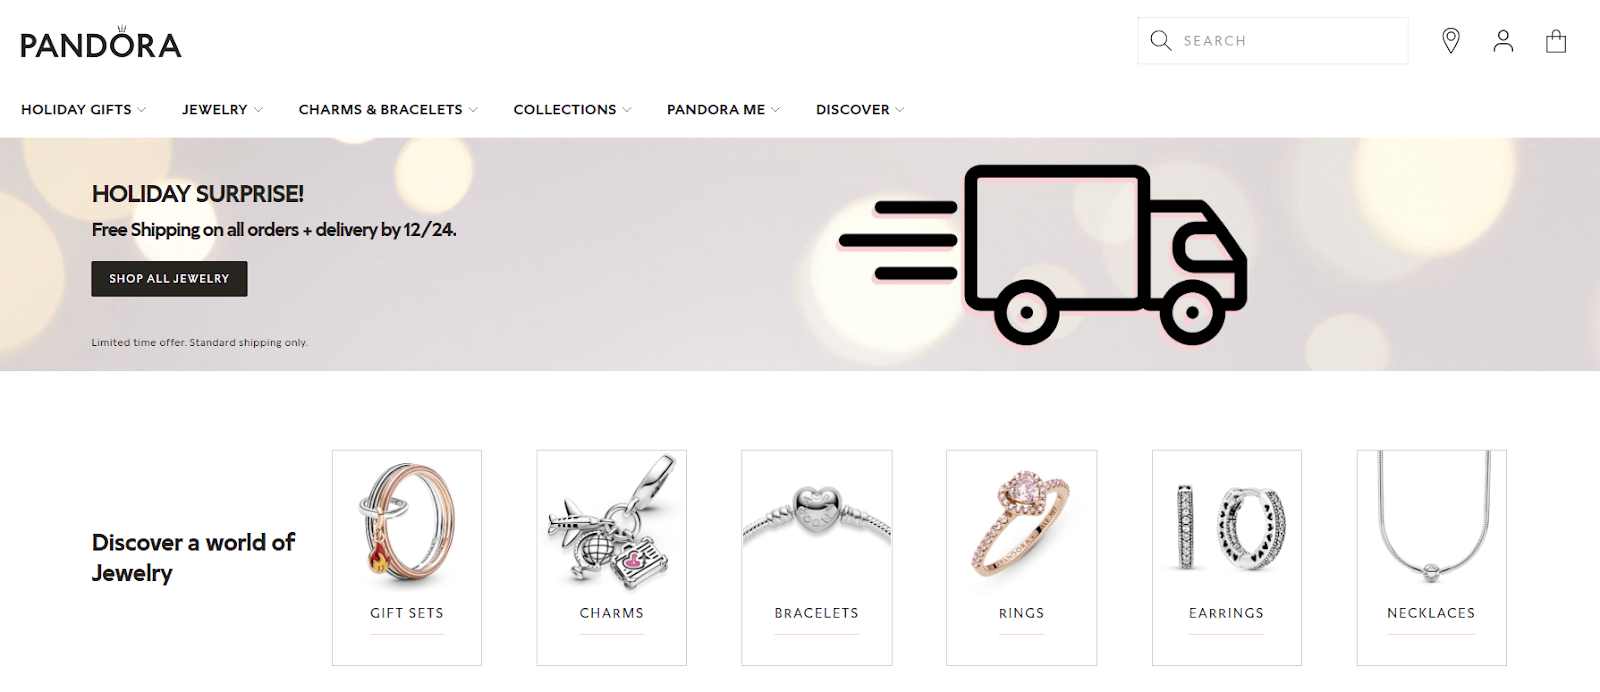 Pandora Stock Is Online Jewelry Is Trending (OTCMKTS:PANDY) | Seeking Alpha